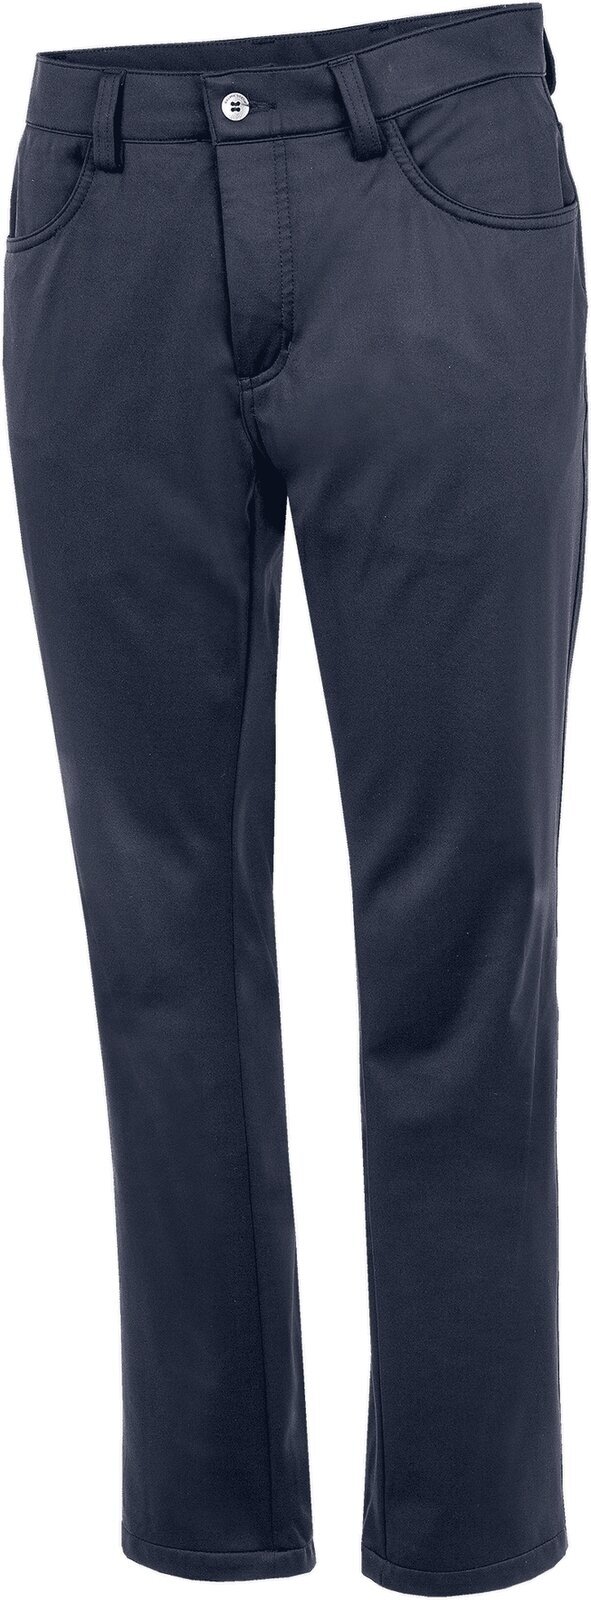 Spodnie Galvin Green Lane MensWindproof And Water Repellent Pants Navy 36/32